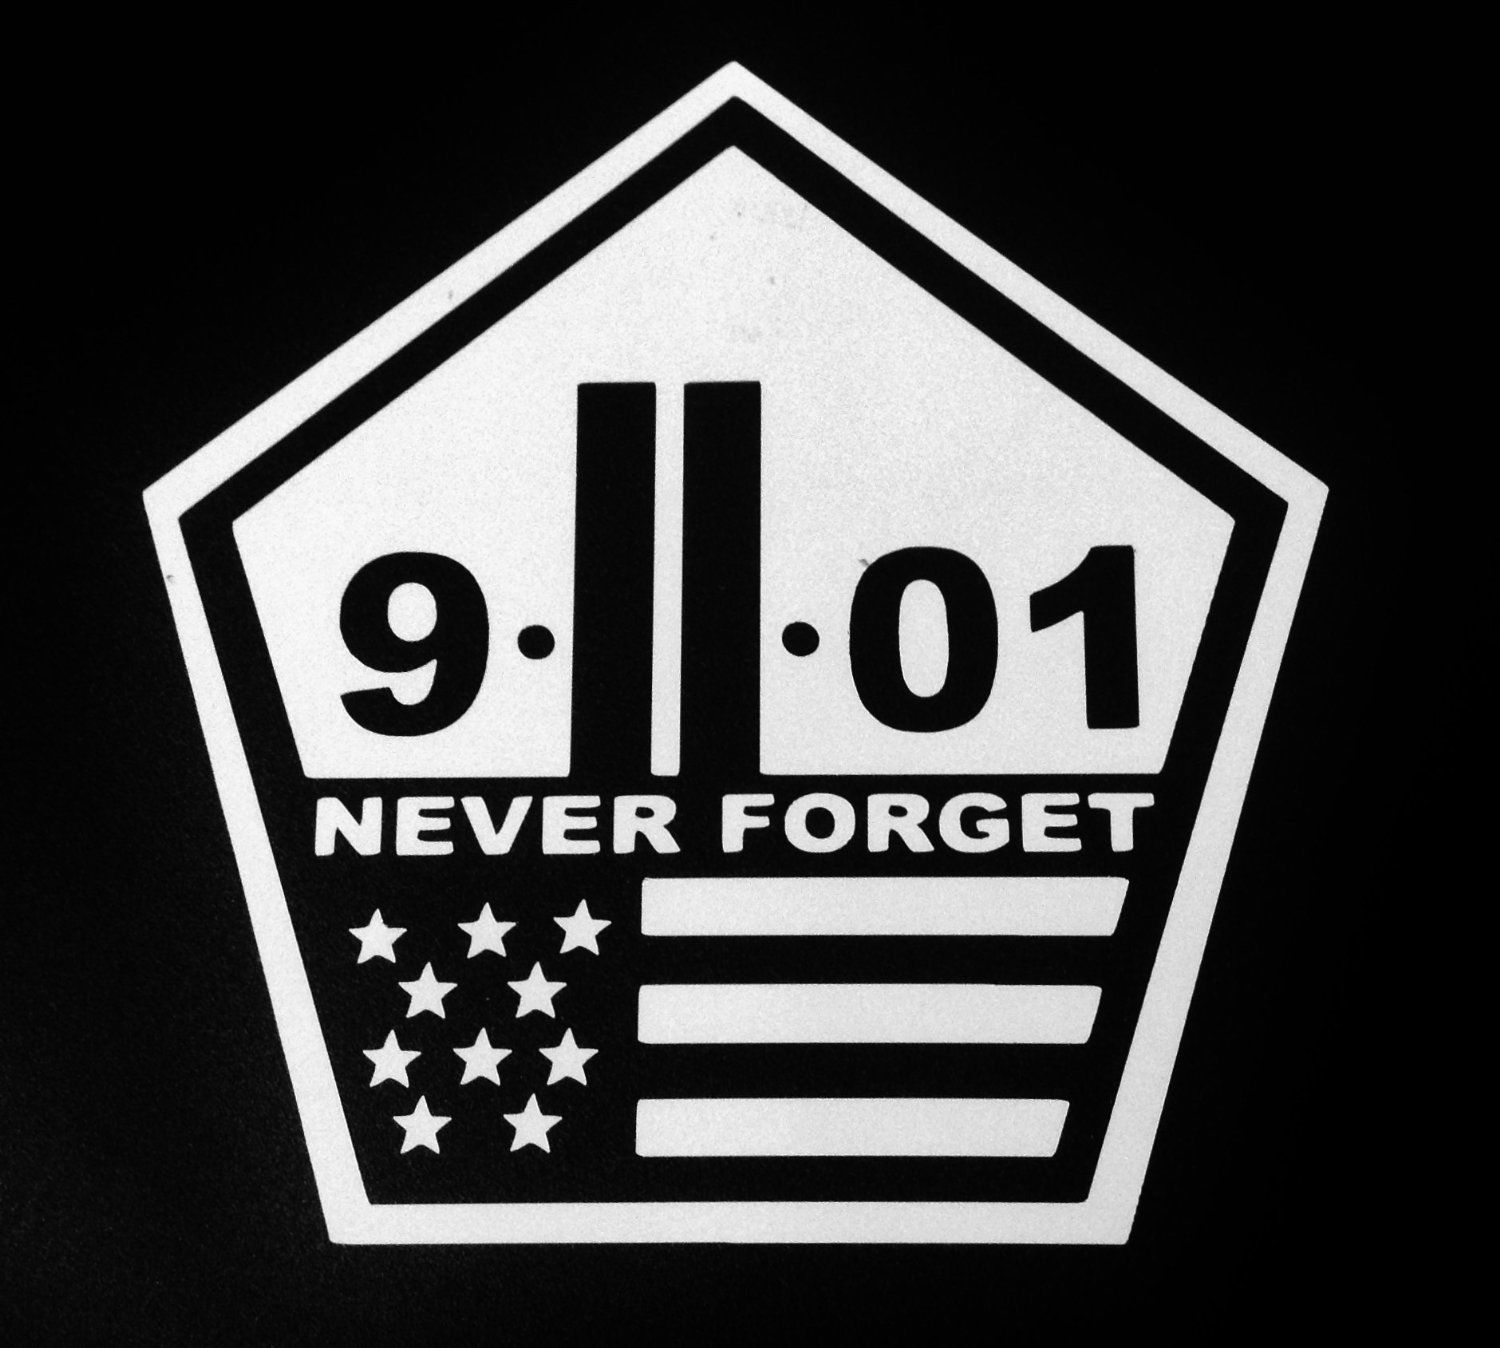 9/11 NYC SKYLINE NEVER FORGET MACBOOK CAR TABLET ART VINYL DECAL 